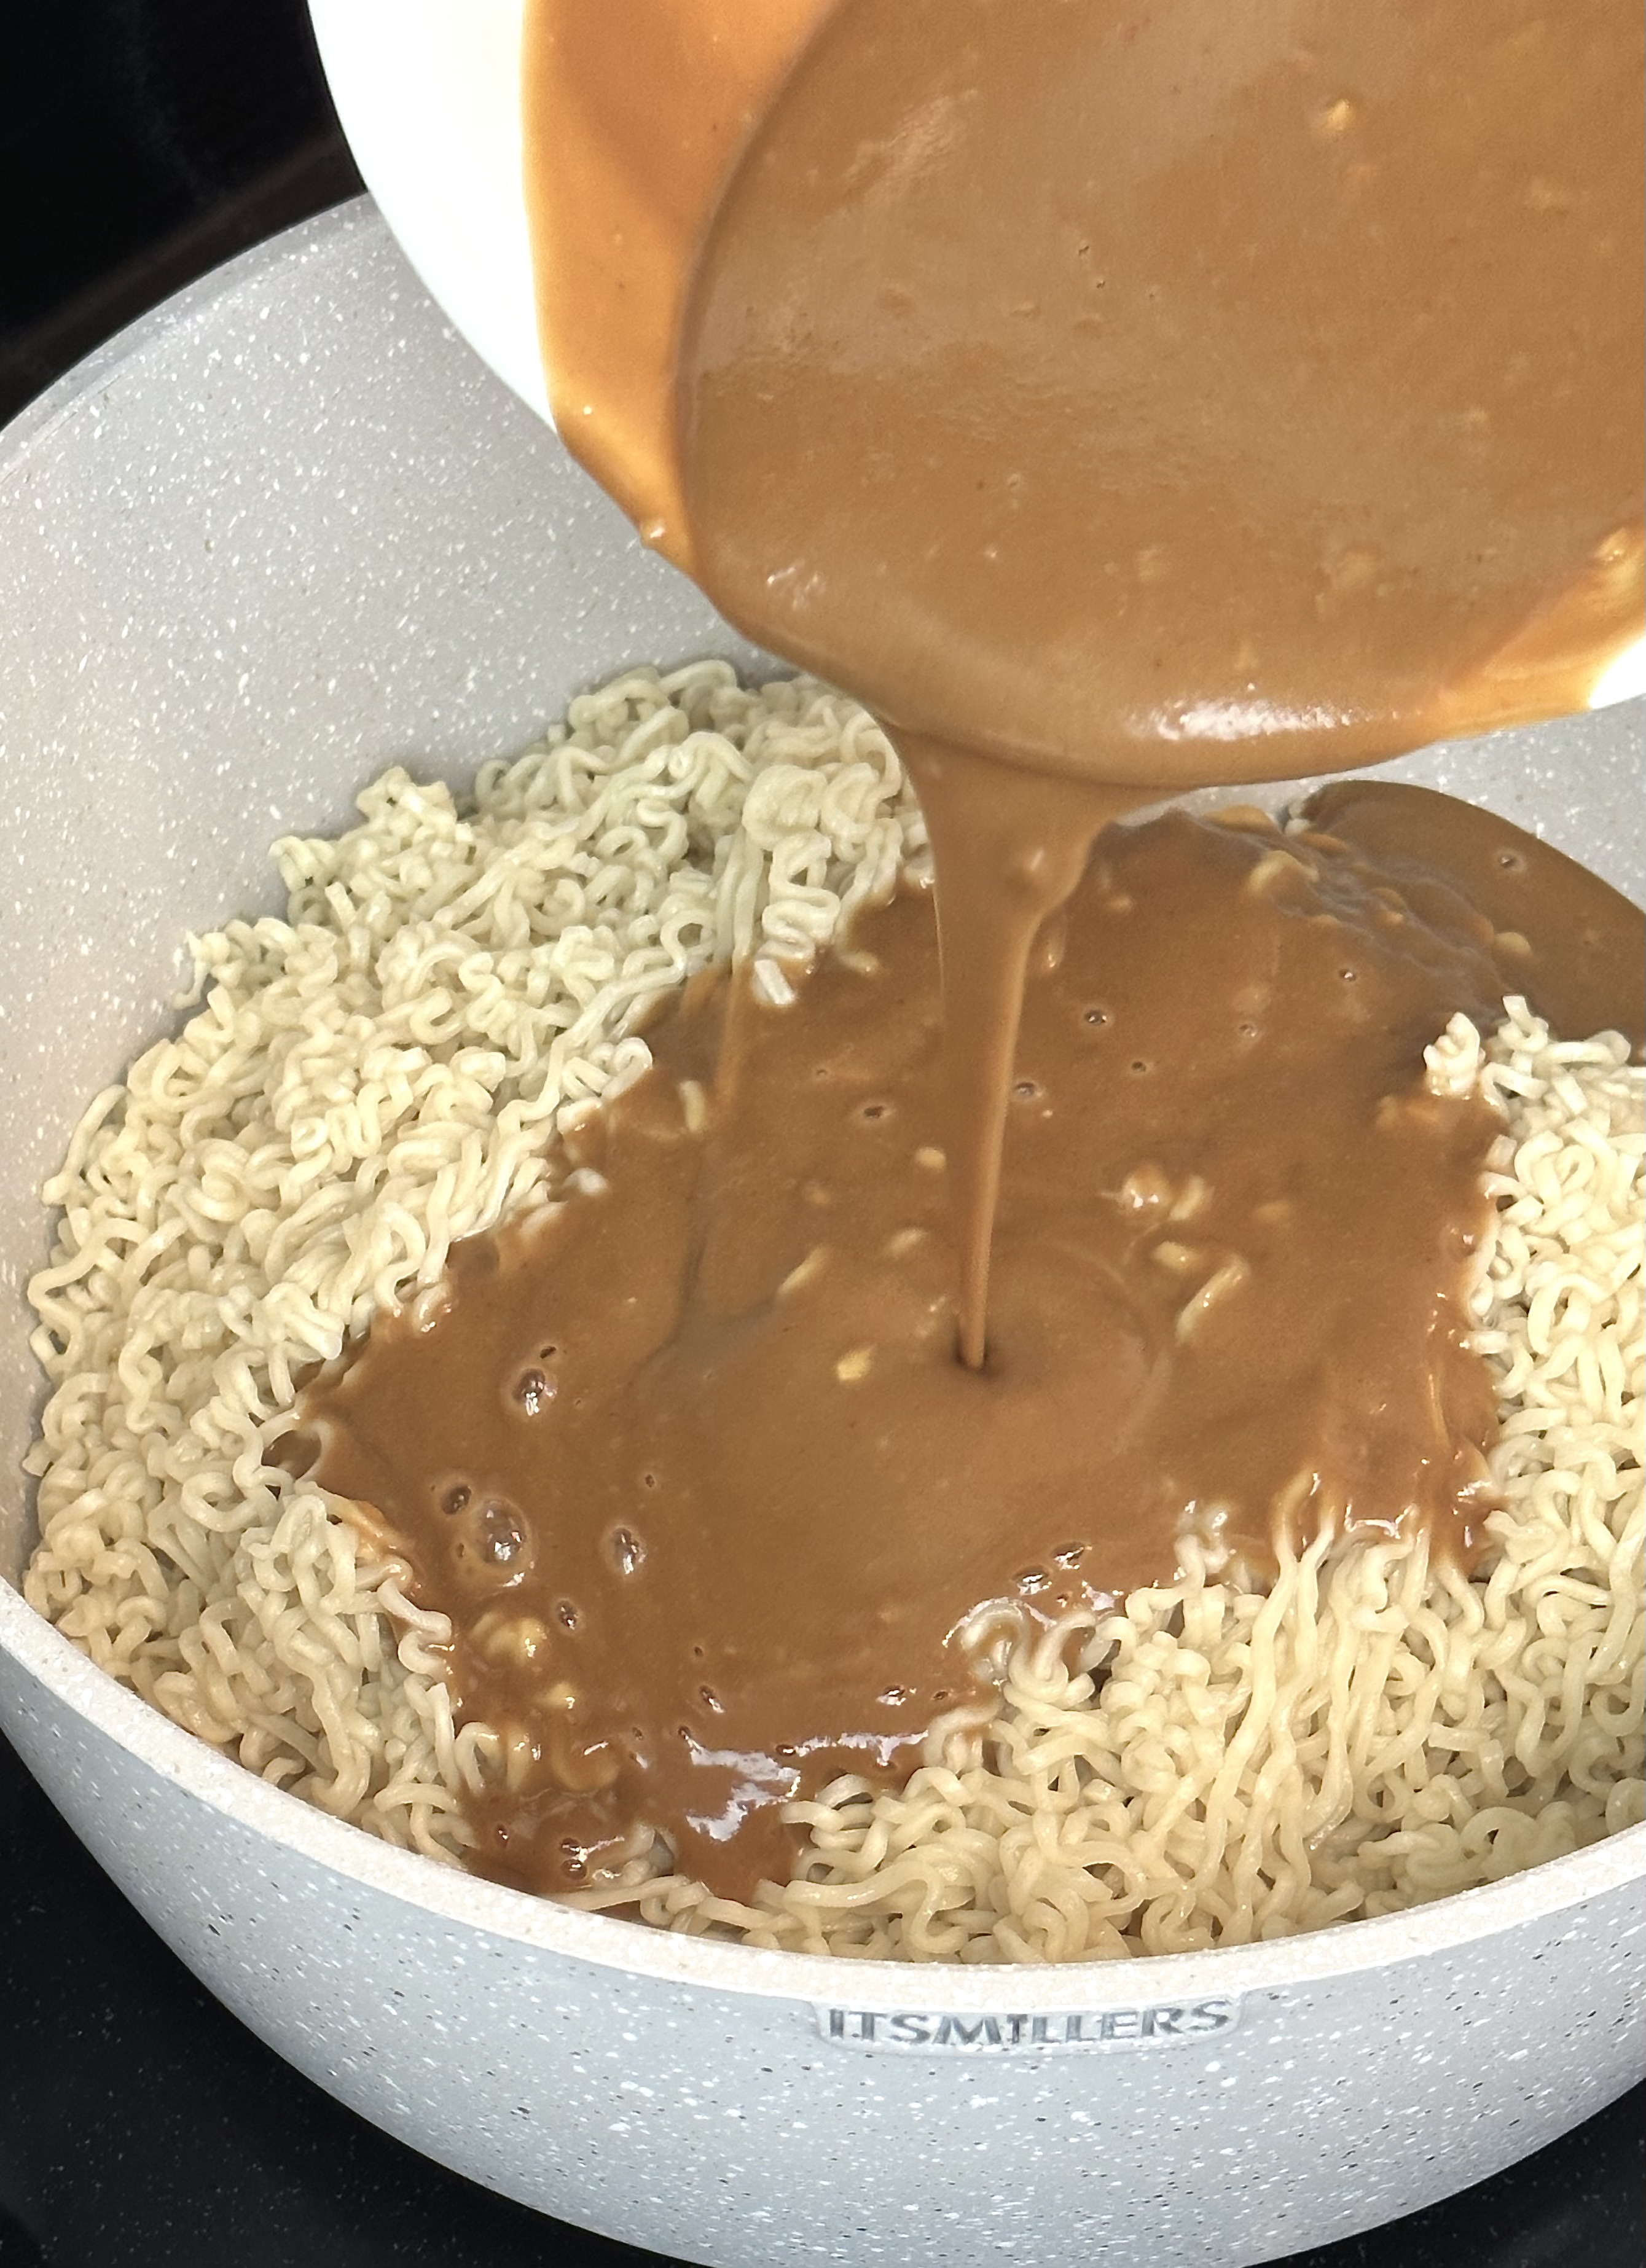 Ramen Noodles with Peanut Sauce